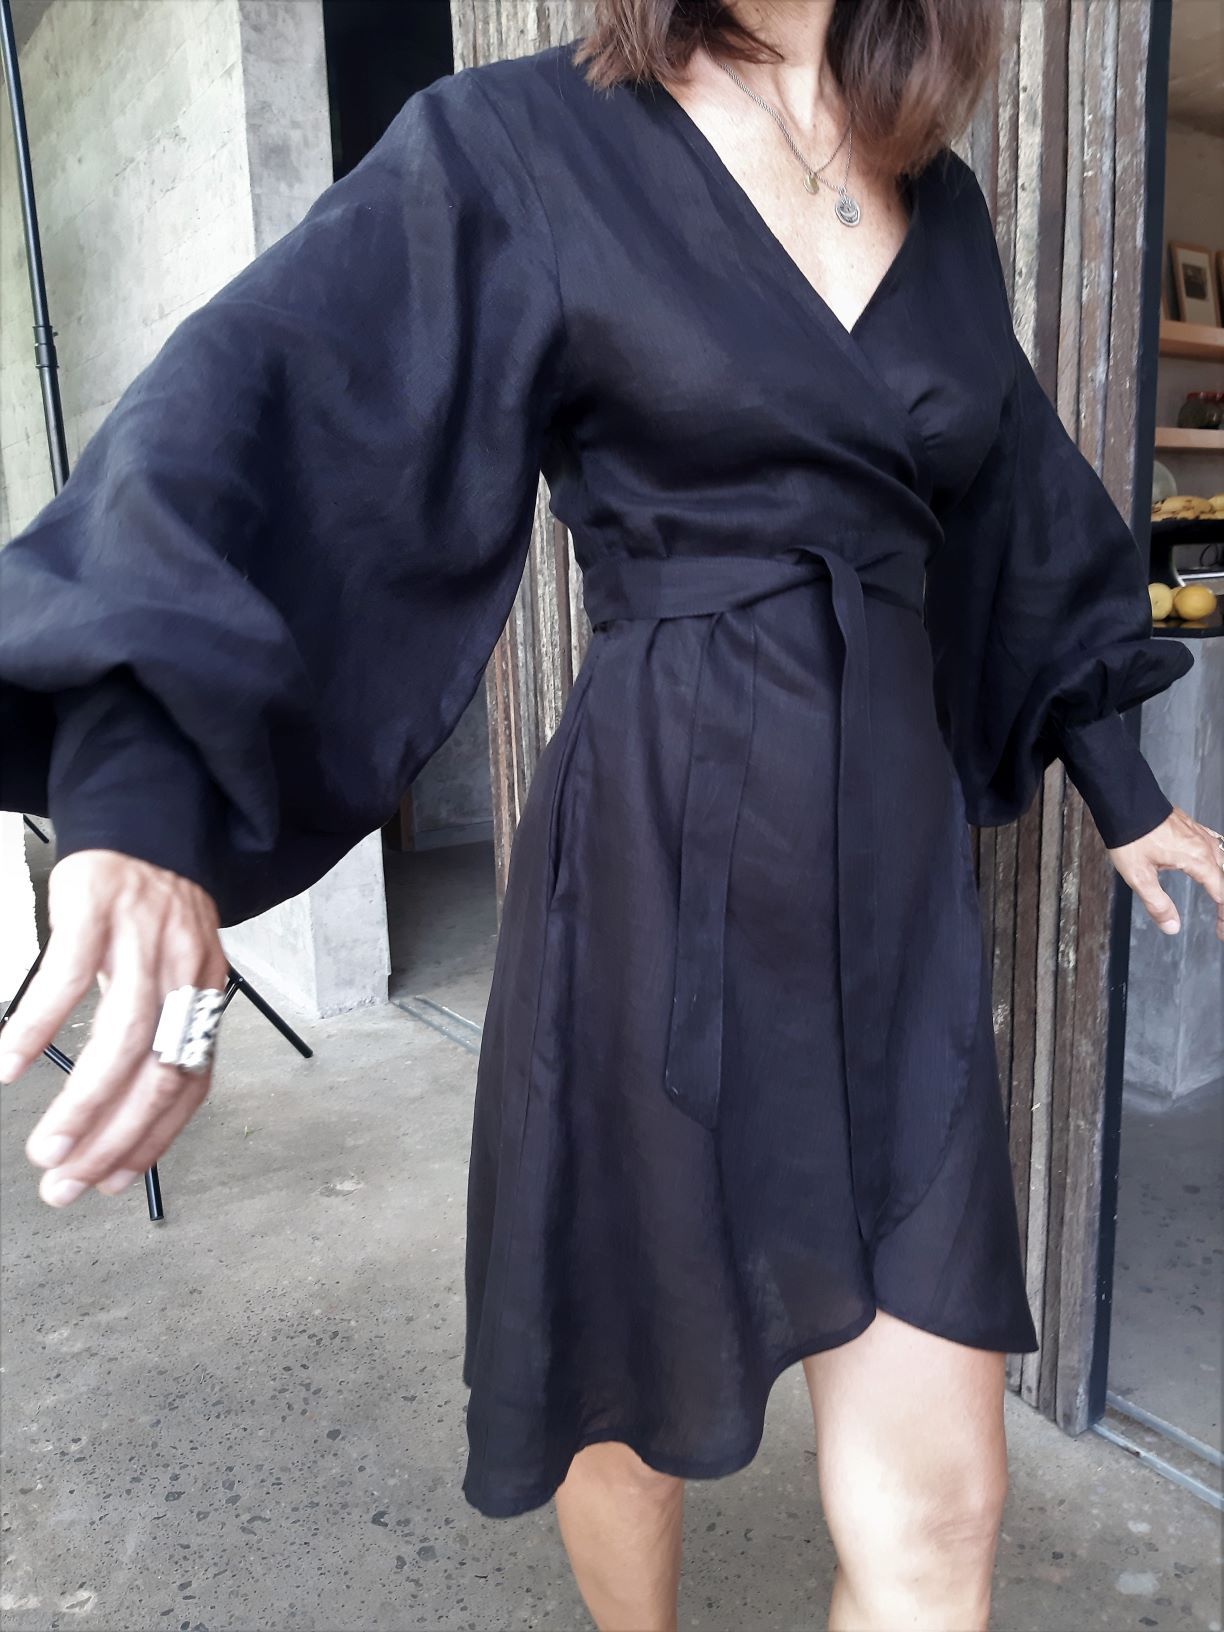 Sukee Linen Dress in Black - l u • c i e e